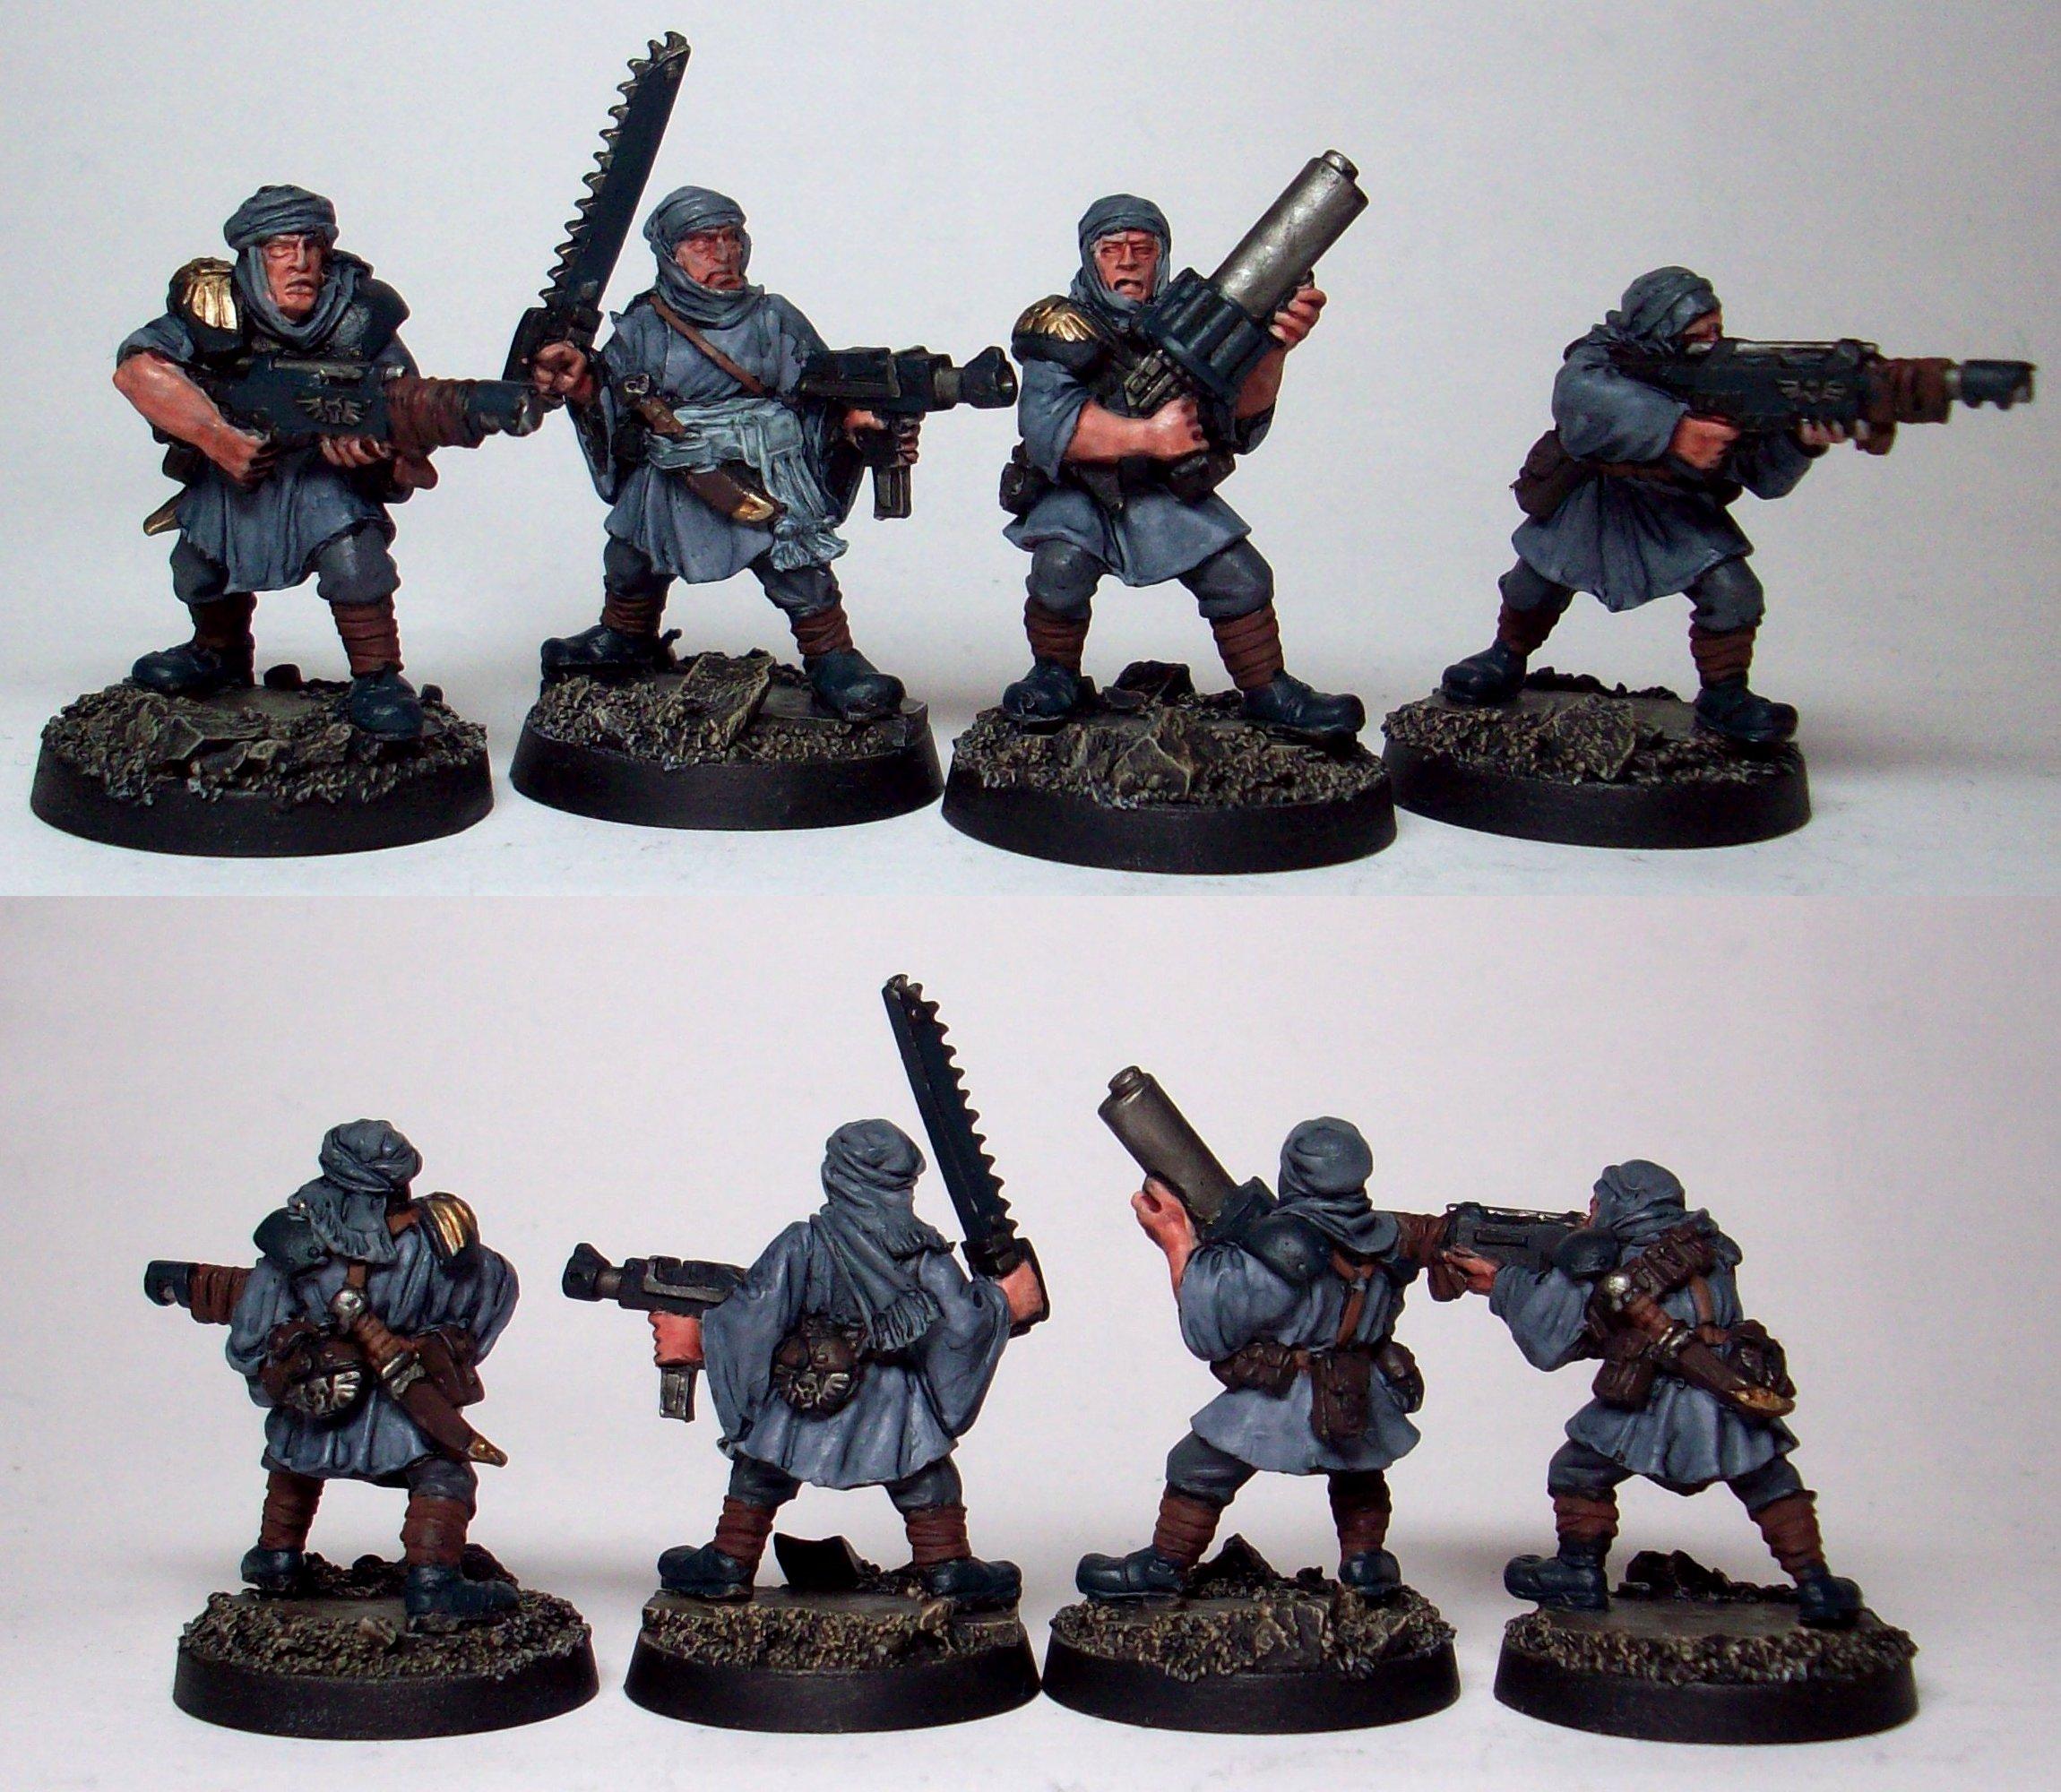 Imperial Guard, Tallarn Desert Raiders